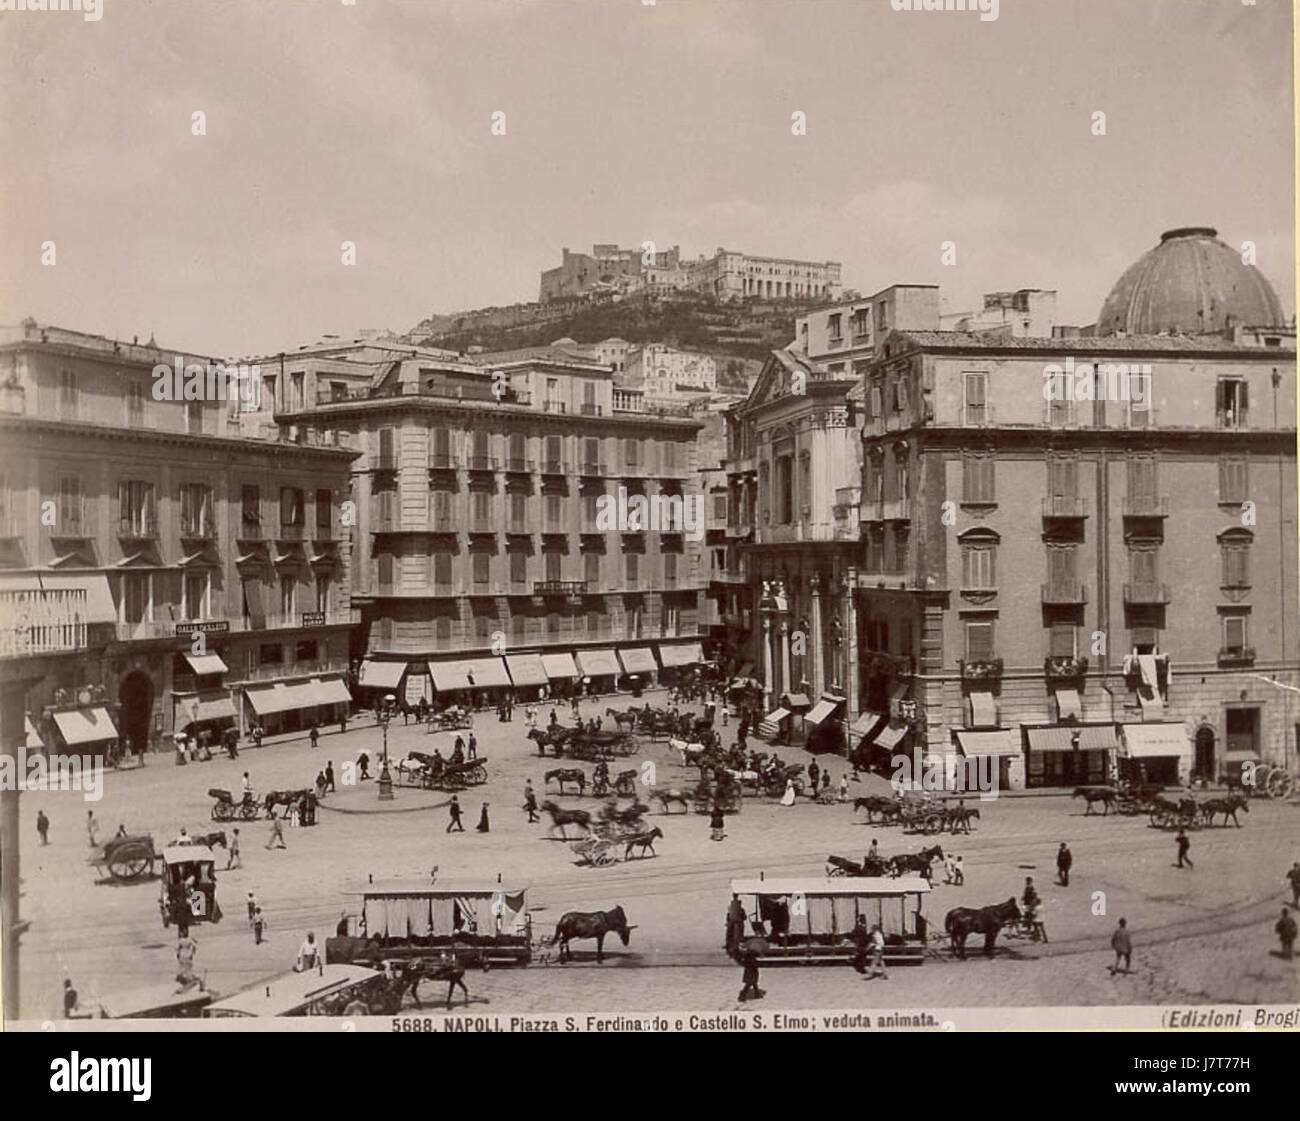 Brogi, Giacomo (1822 1881), n. 5688 Napoli Piazza S. Ferdinando e Castello S. Elmo veduta animata Foto de stock